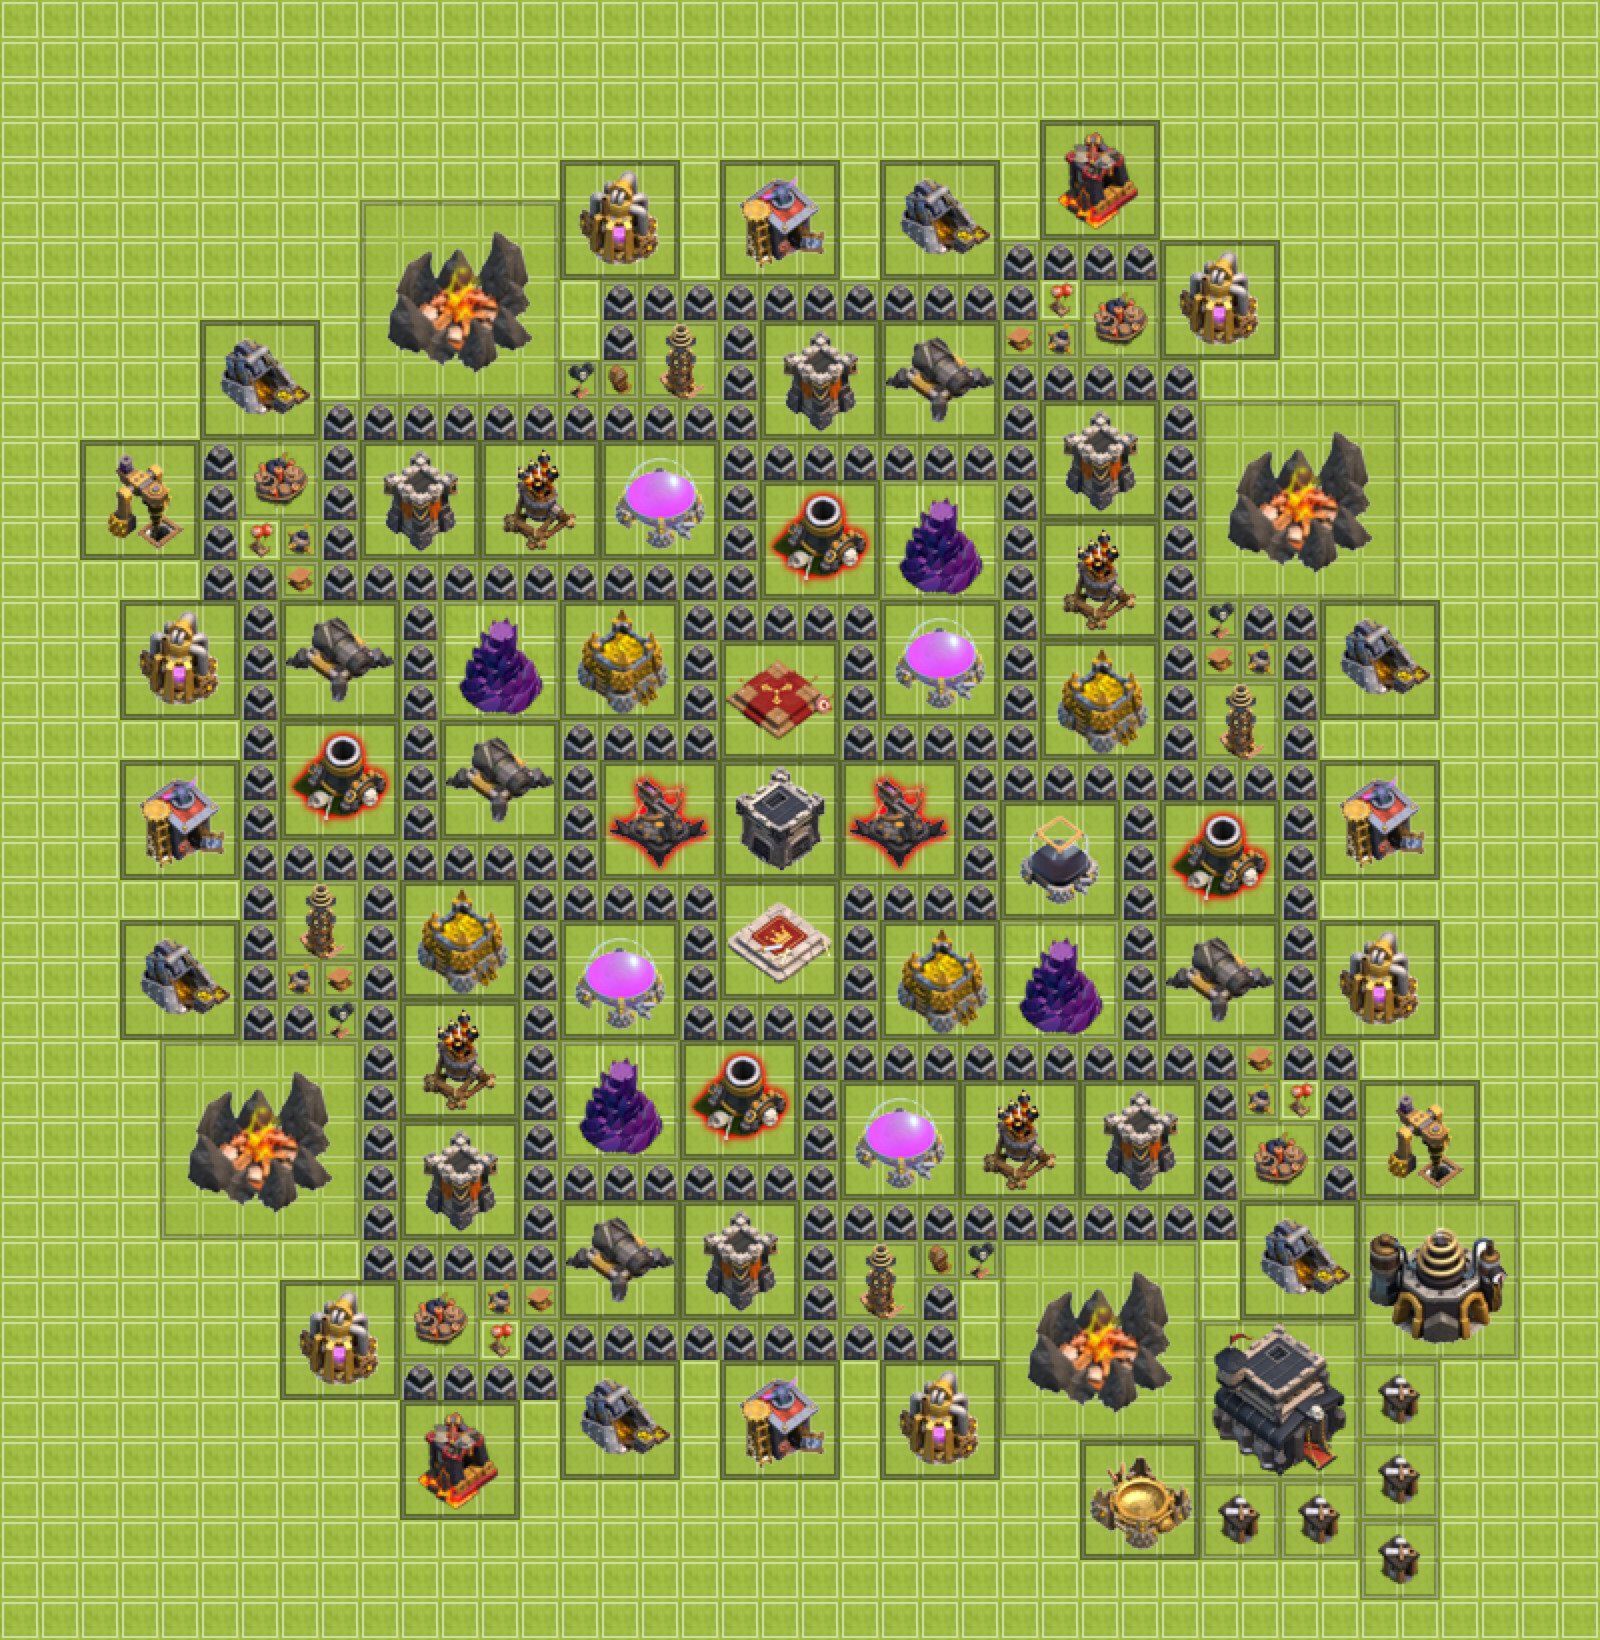 Farming Base TH9 - plan / layout / design - Clash of Clans, #8.